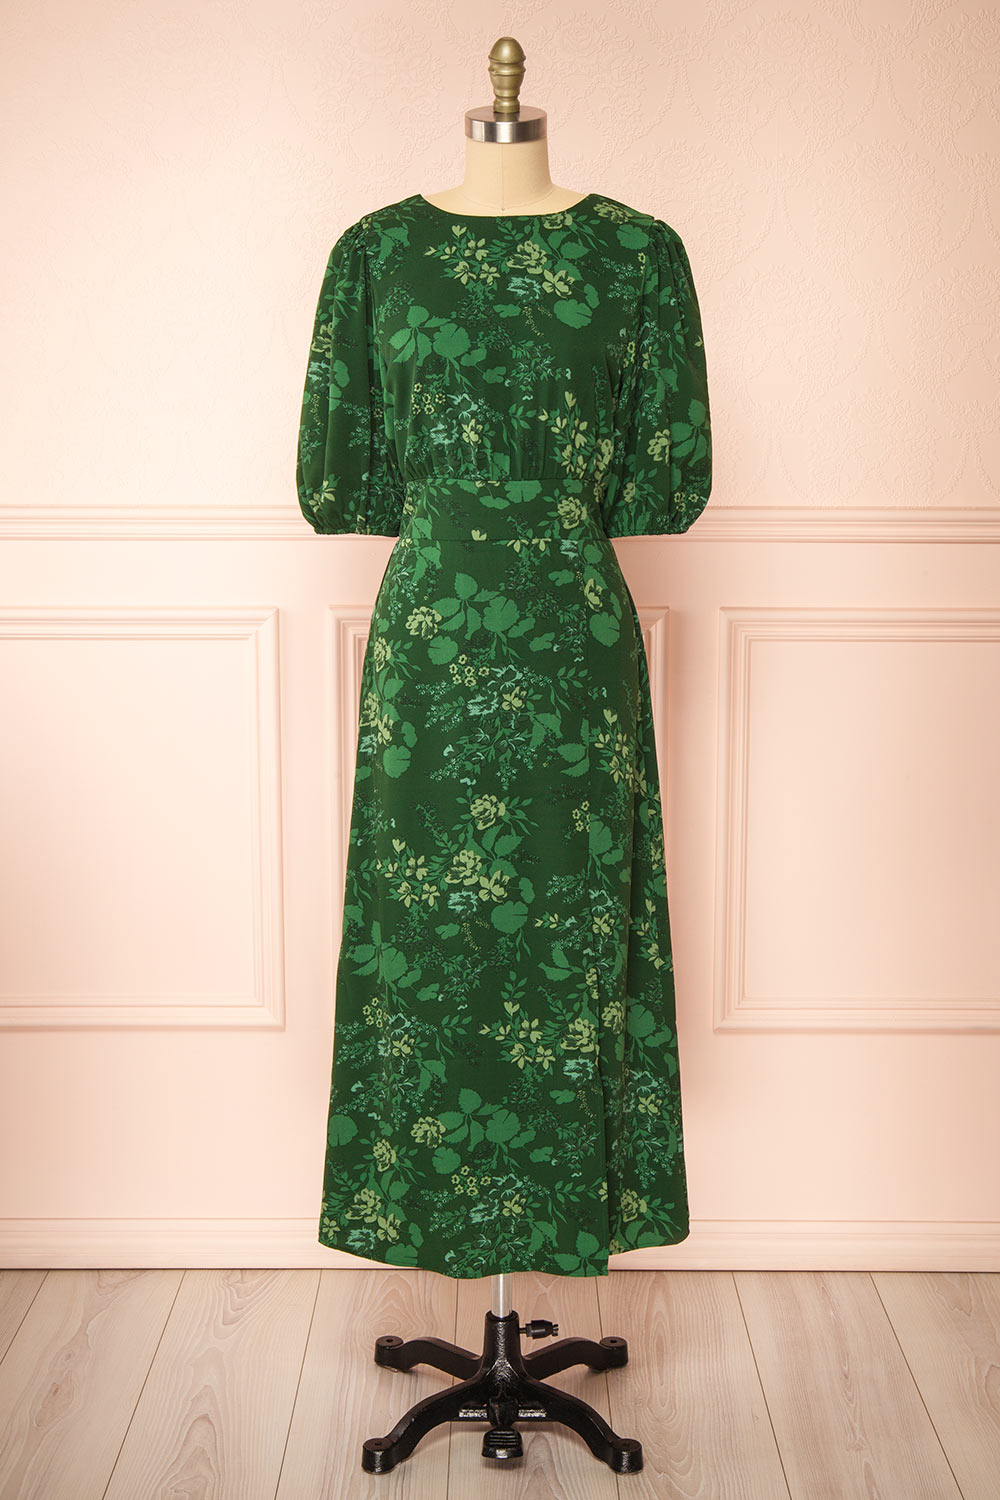 Emirida Long Dark Green Floral Dress | Boutique 1861 front view